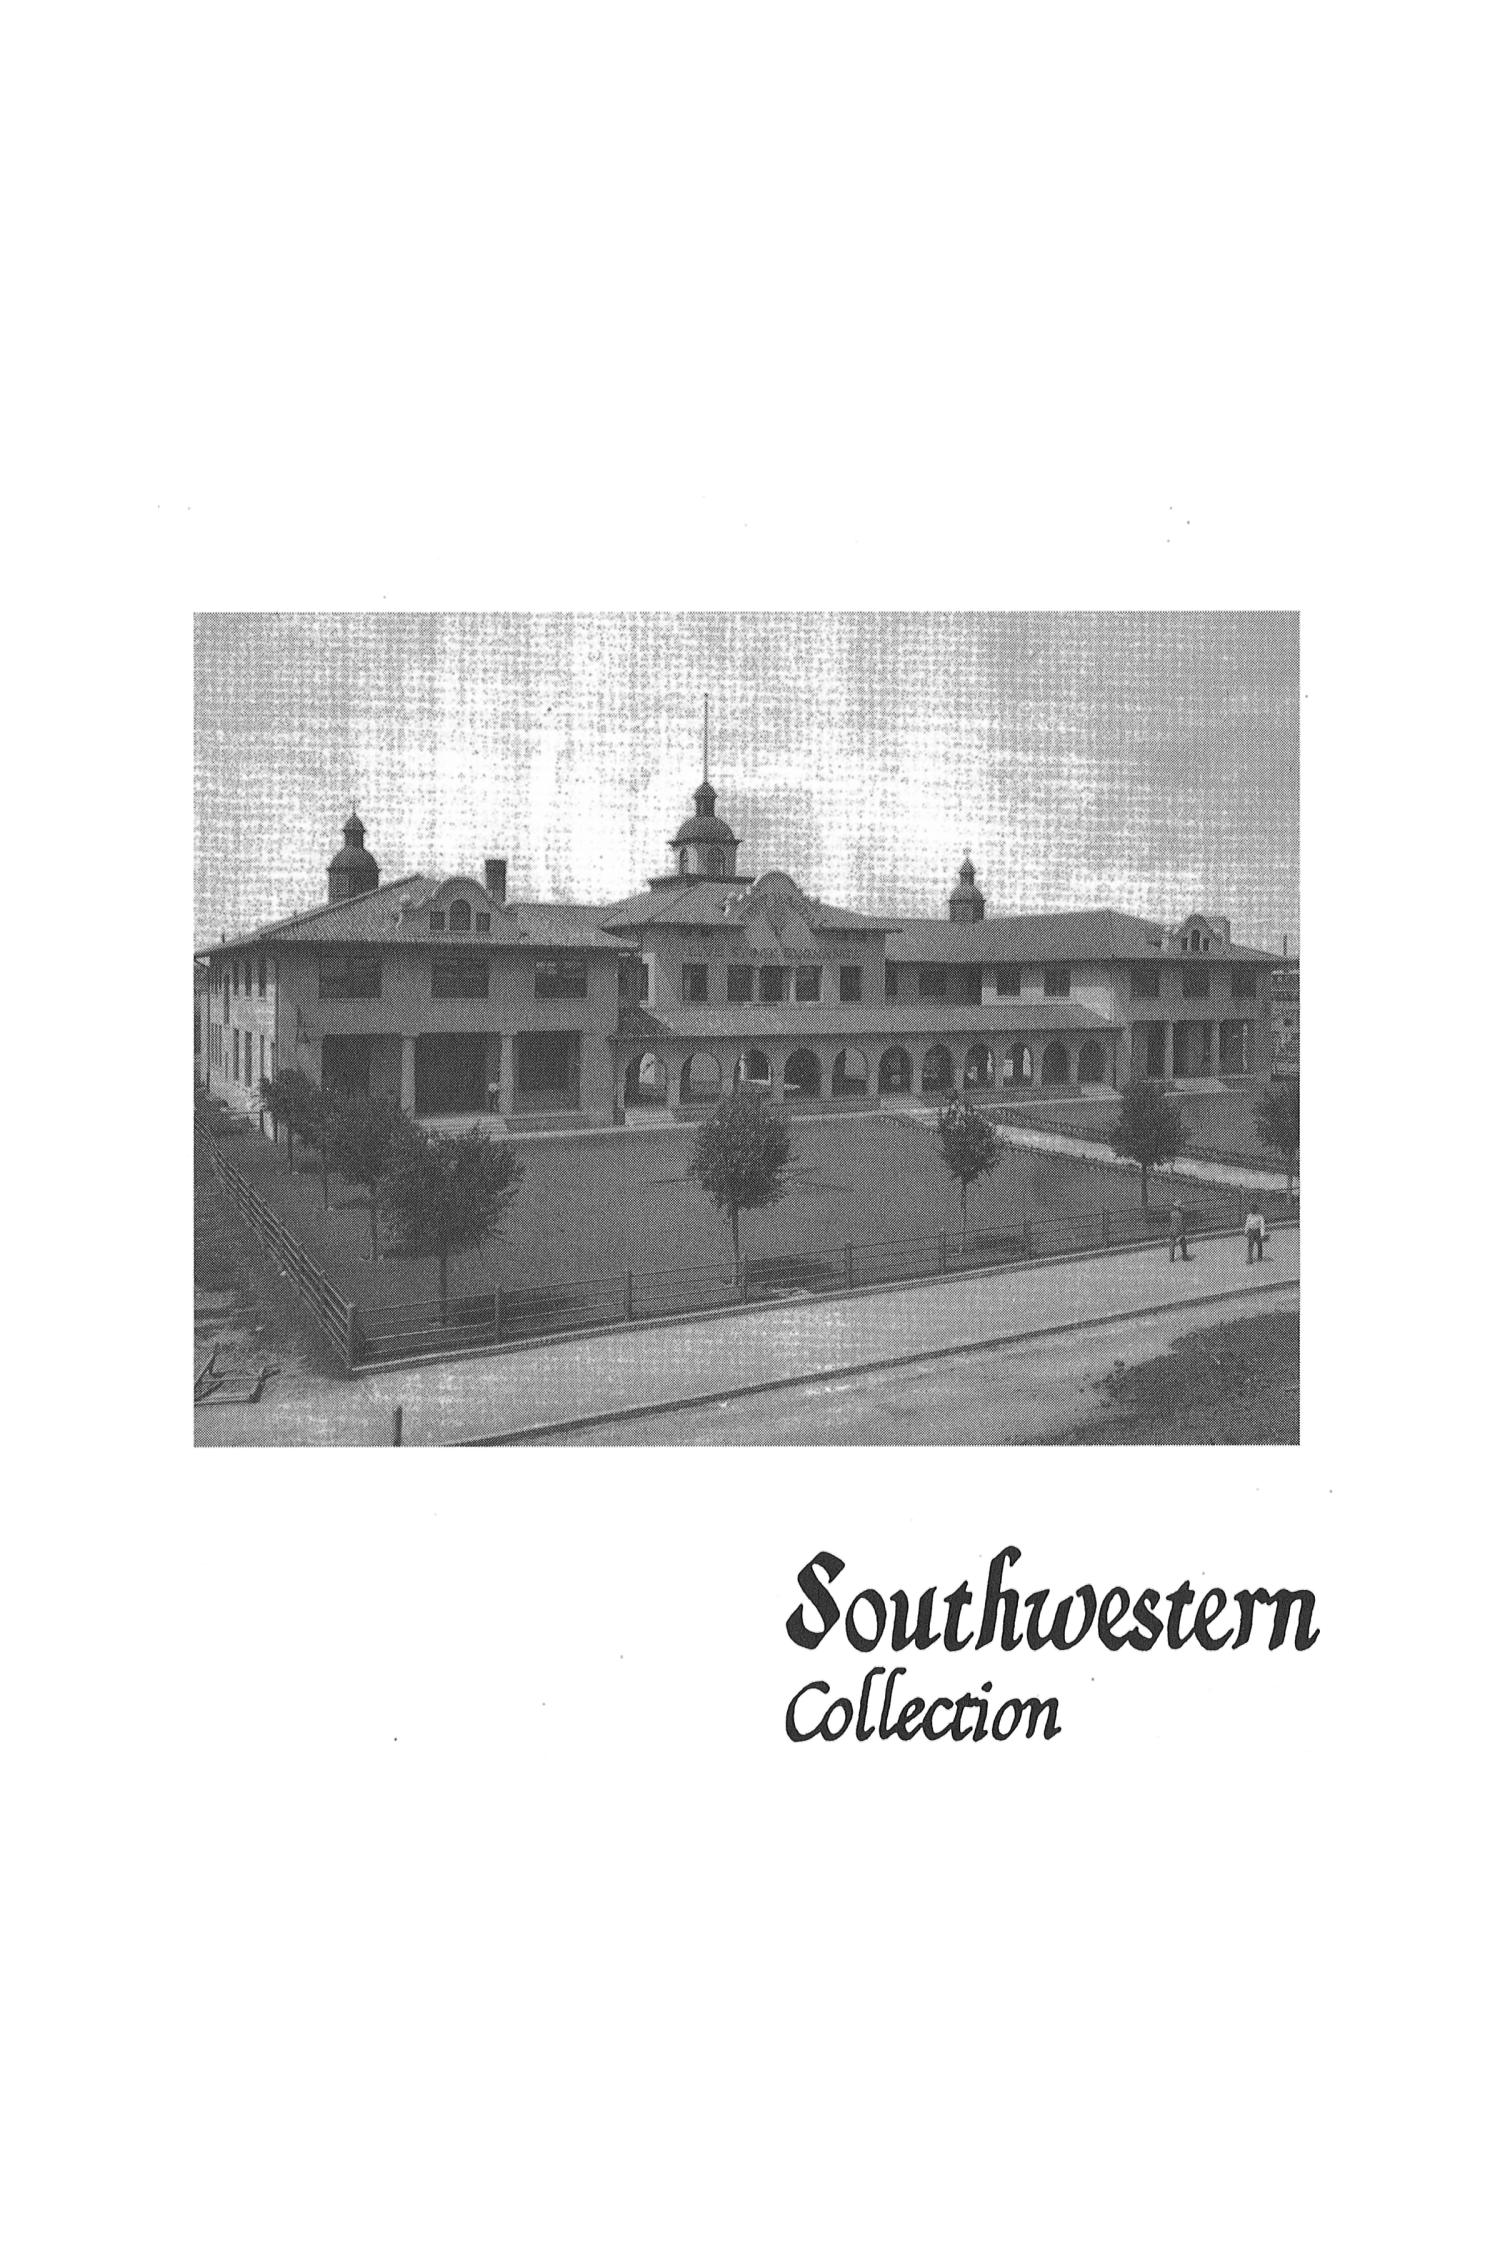 The Southwestern Historical Quarterly, Volume 107, July 2003 - April, 2004
                                                
                                                    459
                                                